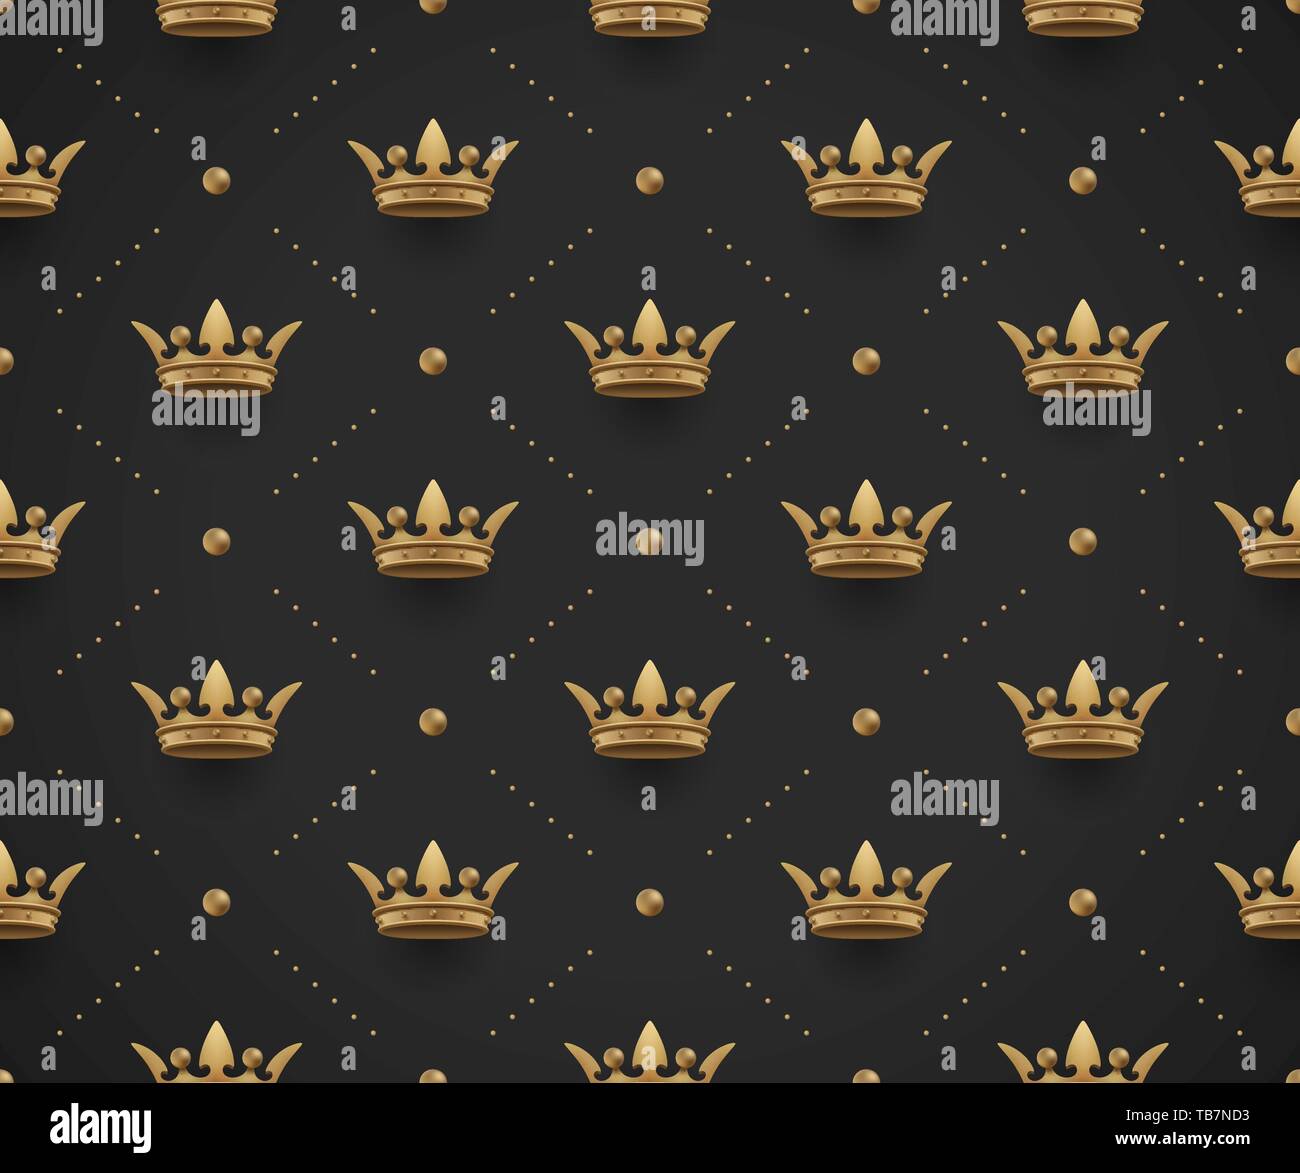 king Live Wallpaper  free download